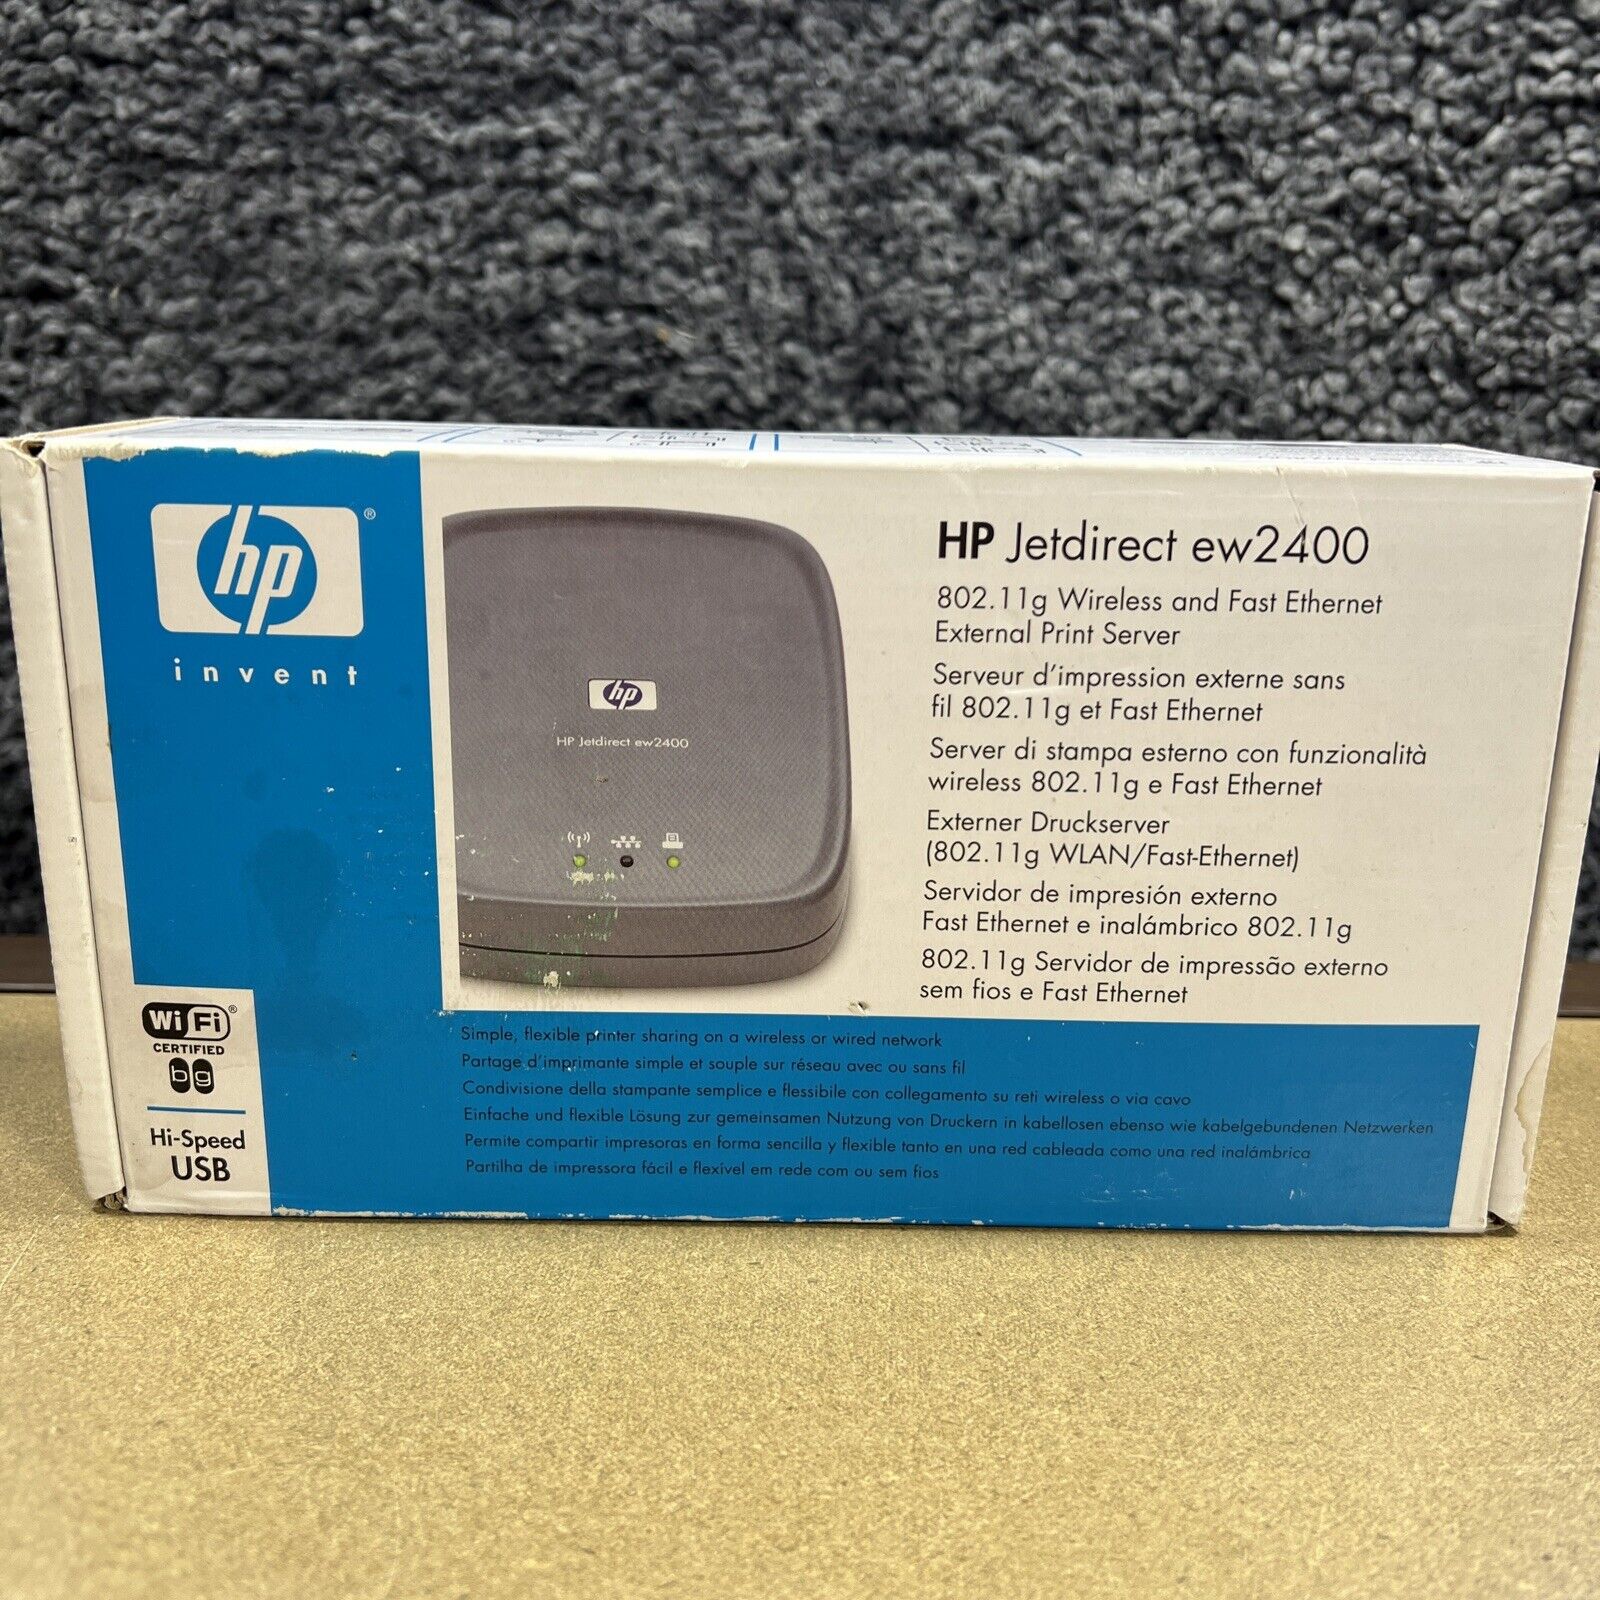 HP JETDIRECT EW2400 WIRELESS ETHERNET EXTERNAL PRINT SERVER FACTORY SEALED